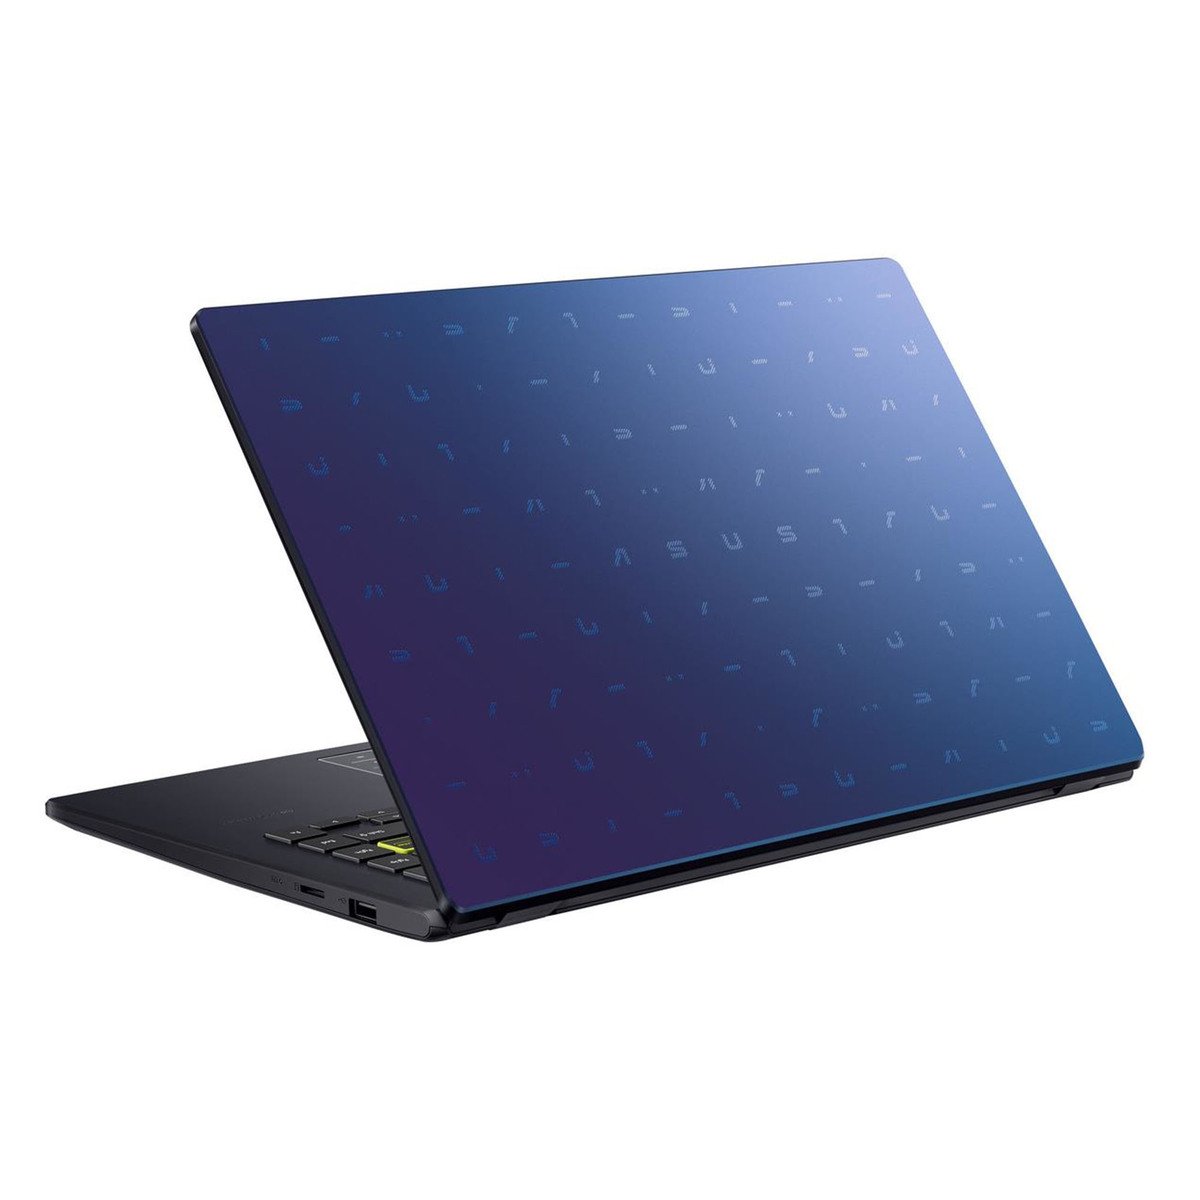 Asus Notebook E410MA-EB009T,Intel Celeron N4200,14" FHD,Intel UHD Graphics 600,4GB RAM,128GB SSD,Blue